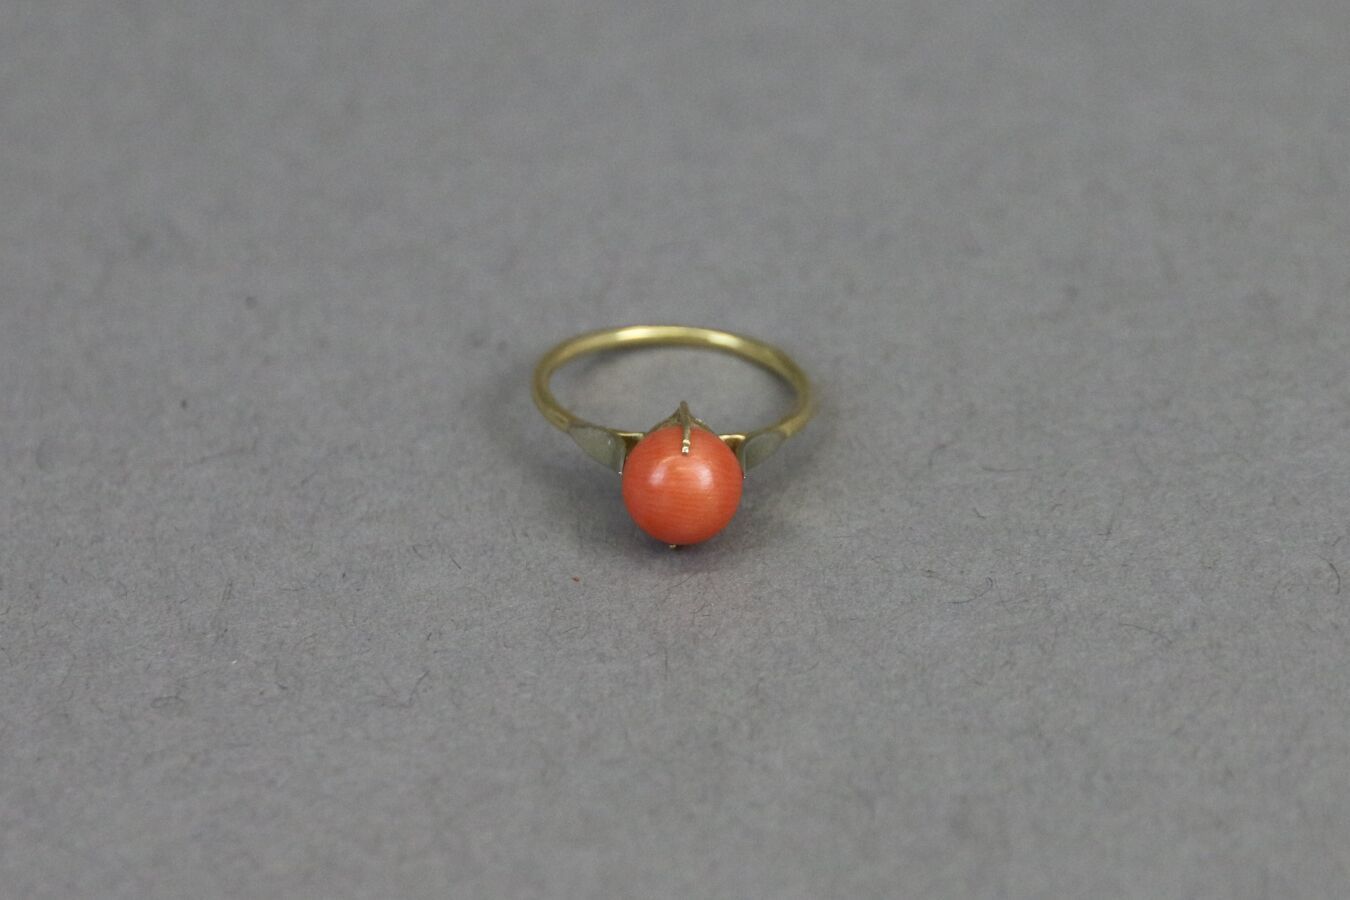 Null 黄金戒指，镶有爪子的珊瑚球。

TDD: 44

毛重：1,4 g